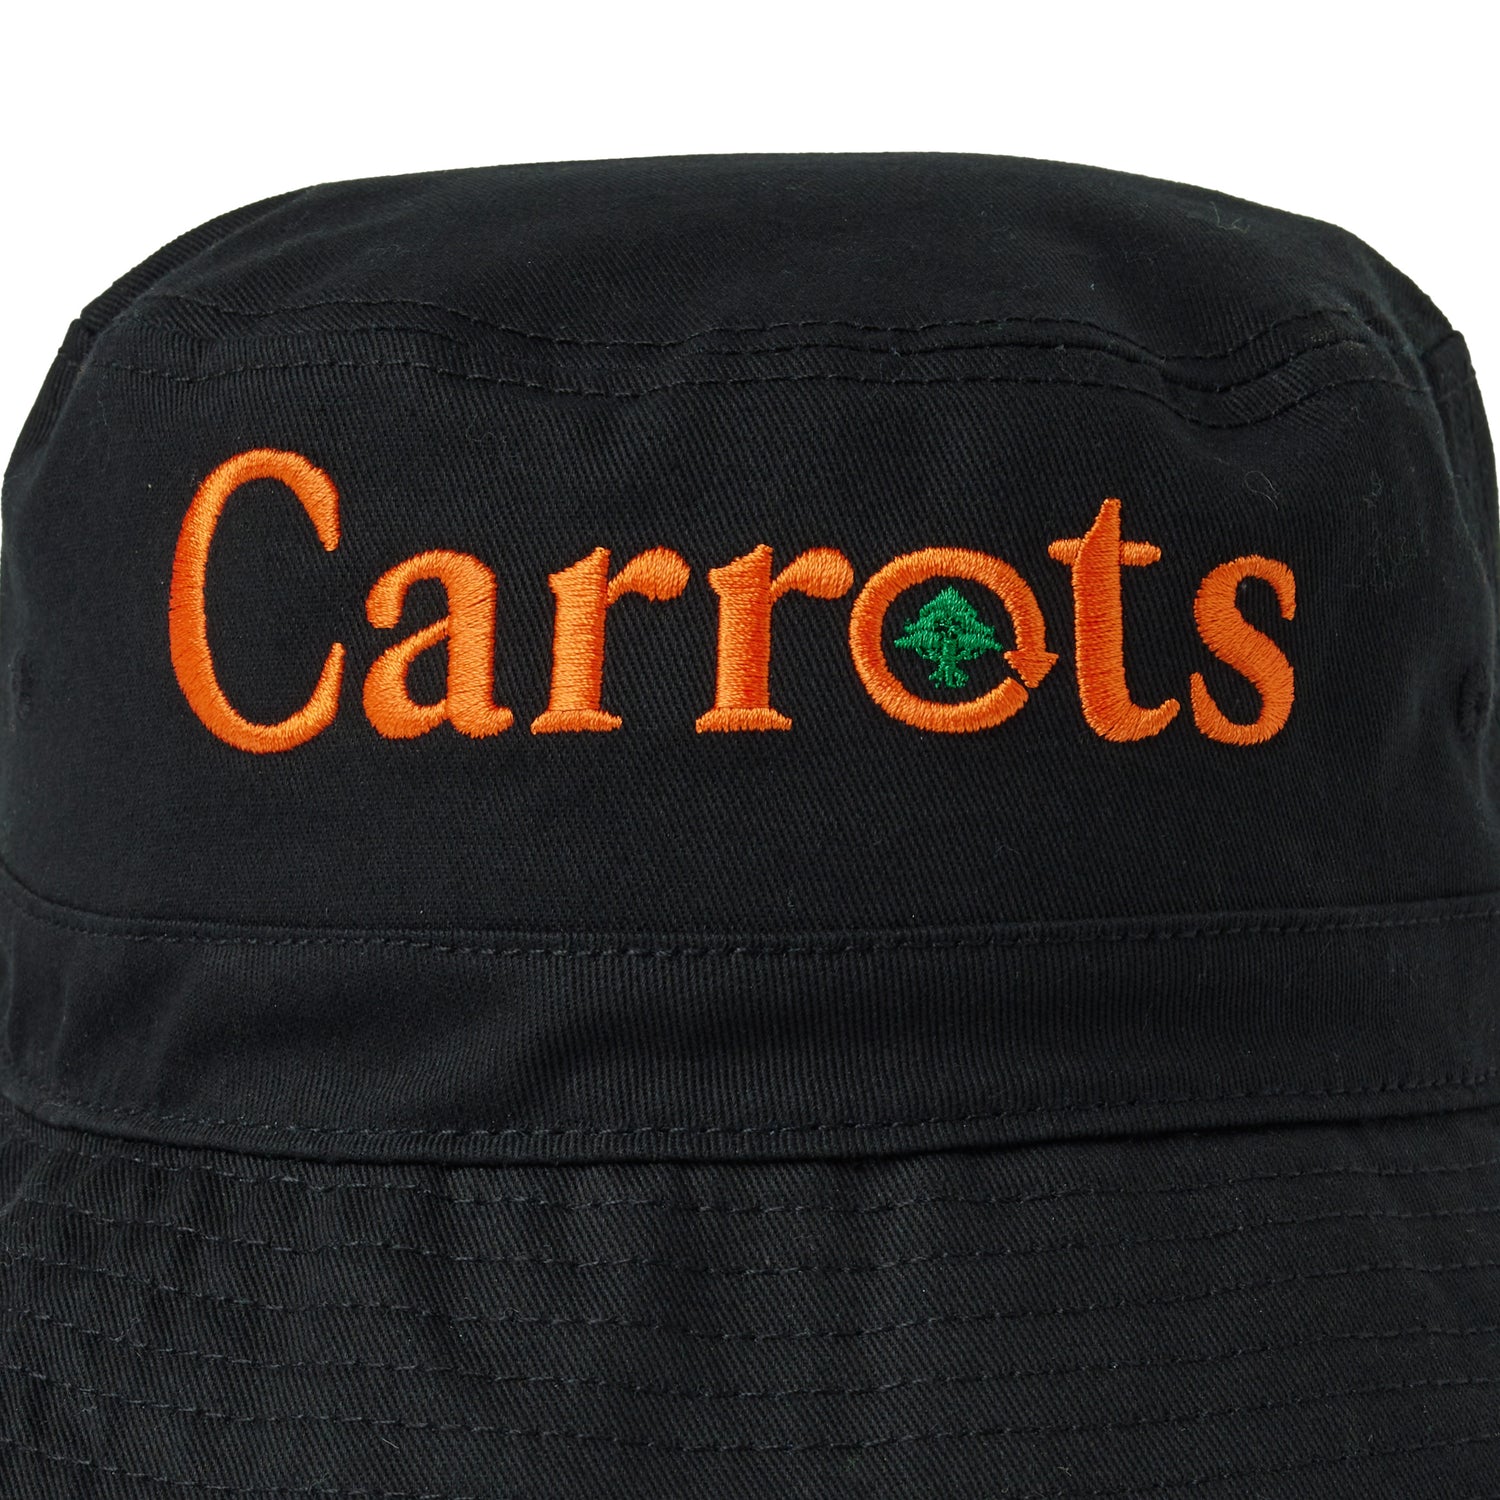 CARROTS X LRG CYCLE WOODMARK BUCKET HAT - BLACK